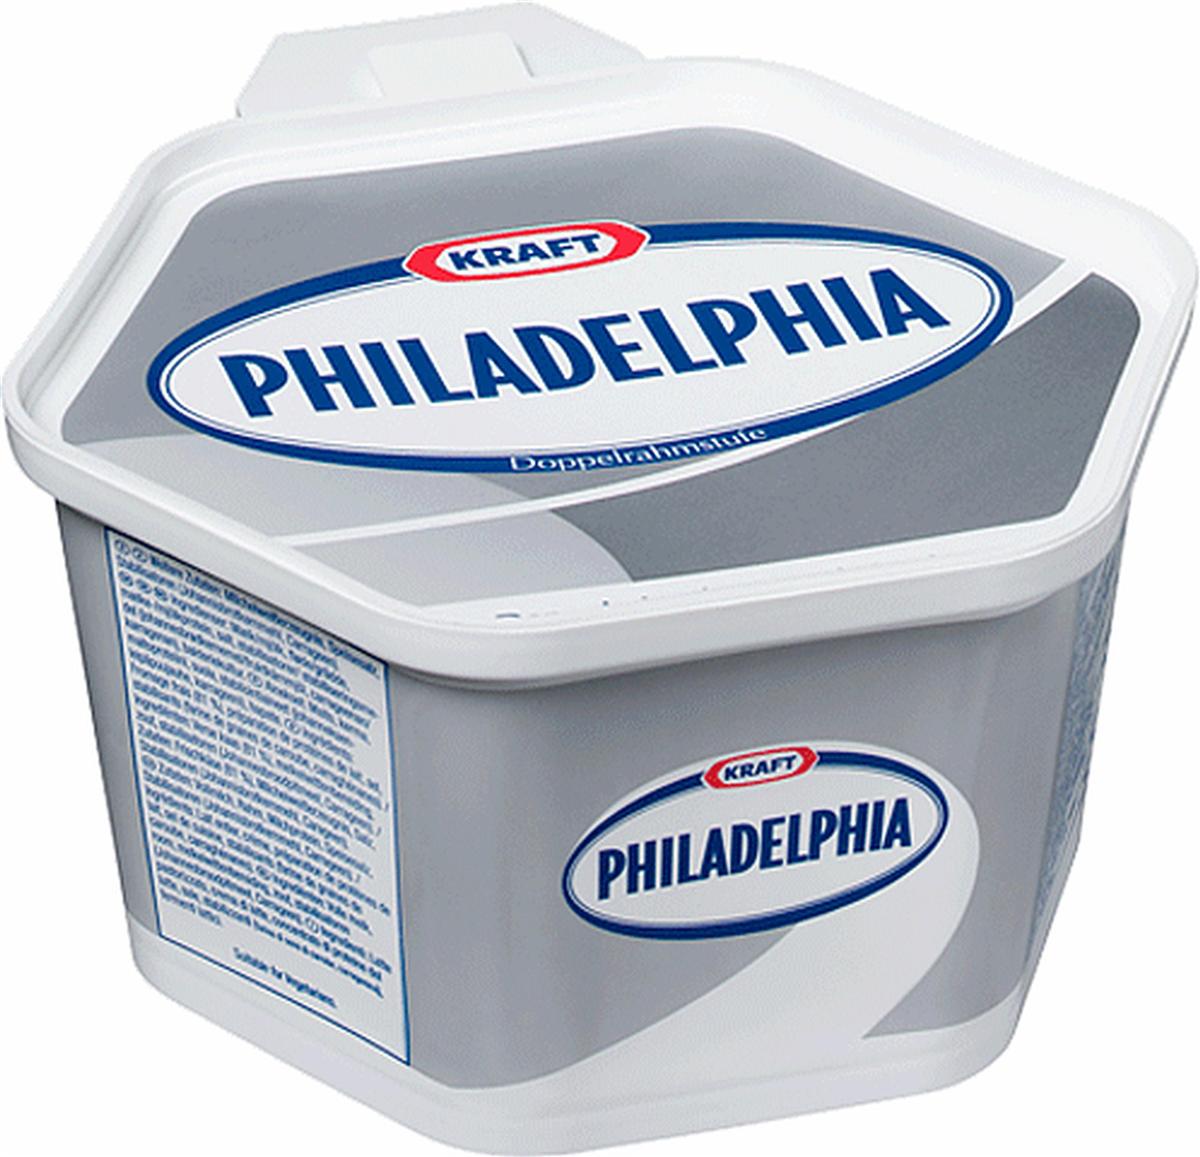 Philadelphiaost orginal 1,65 kg*